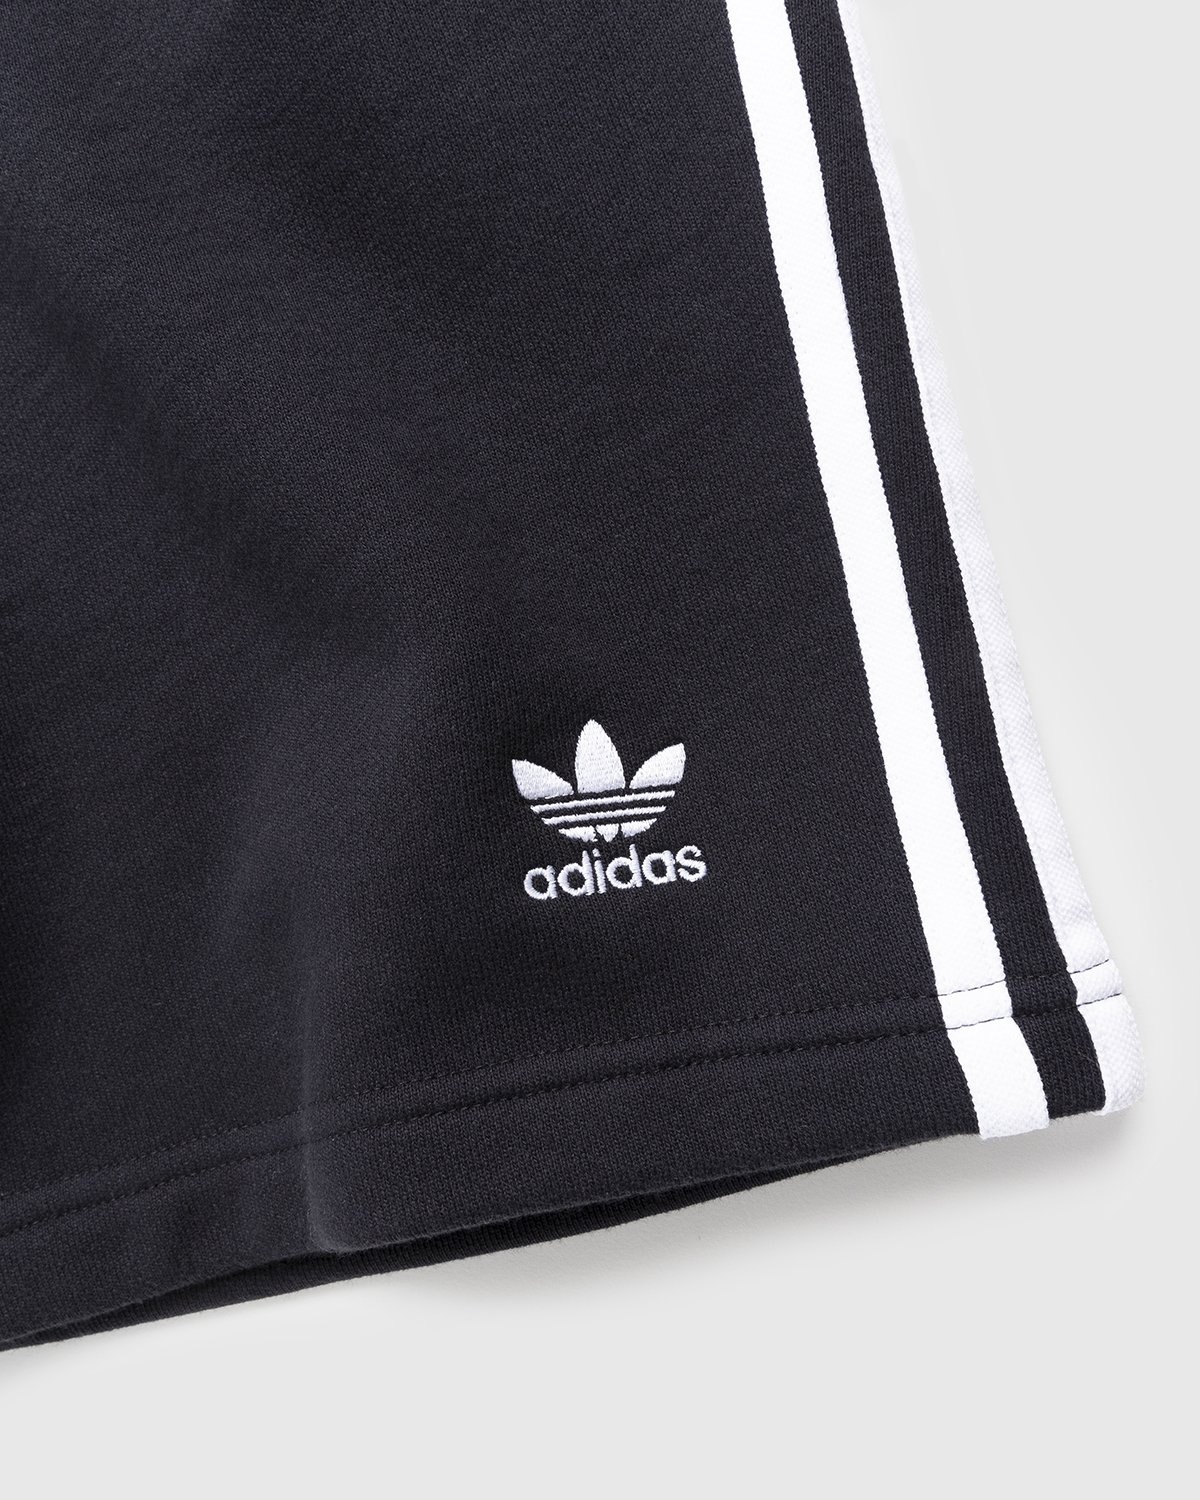 Adidas – 3 Stripe Short Black - Shorts - Black - Image 3